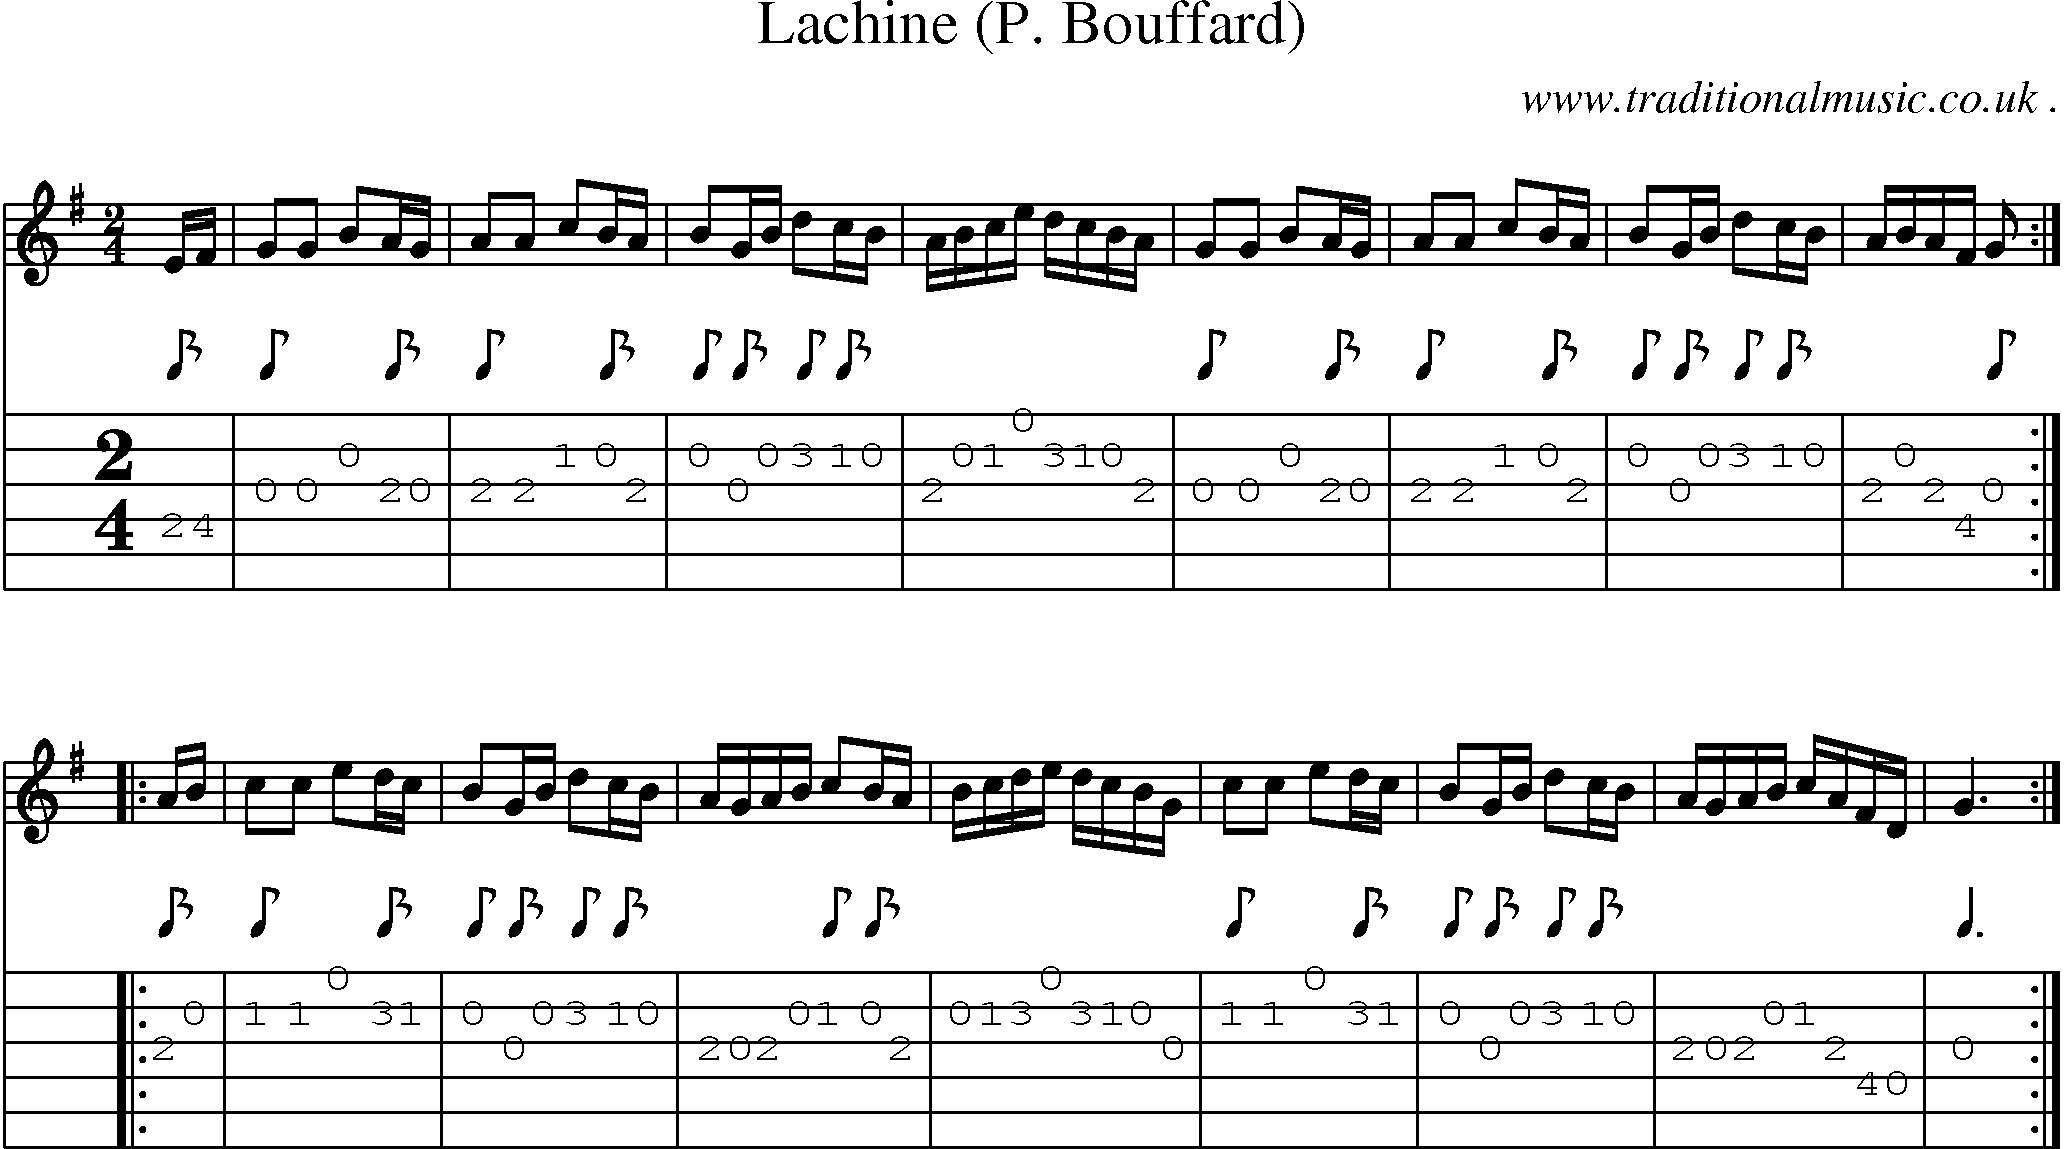 Sheet-Music and Guitar Tabs for Lachine (p Bouffard)